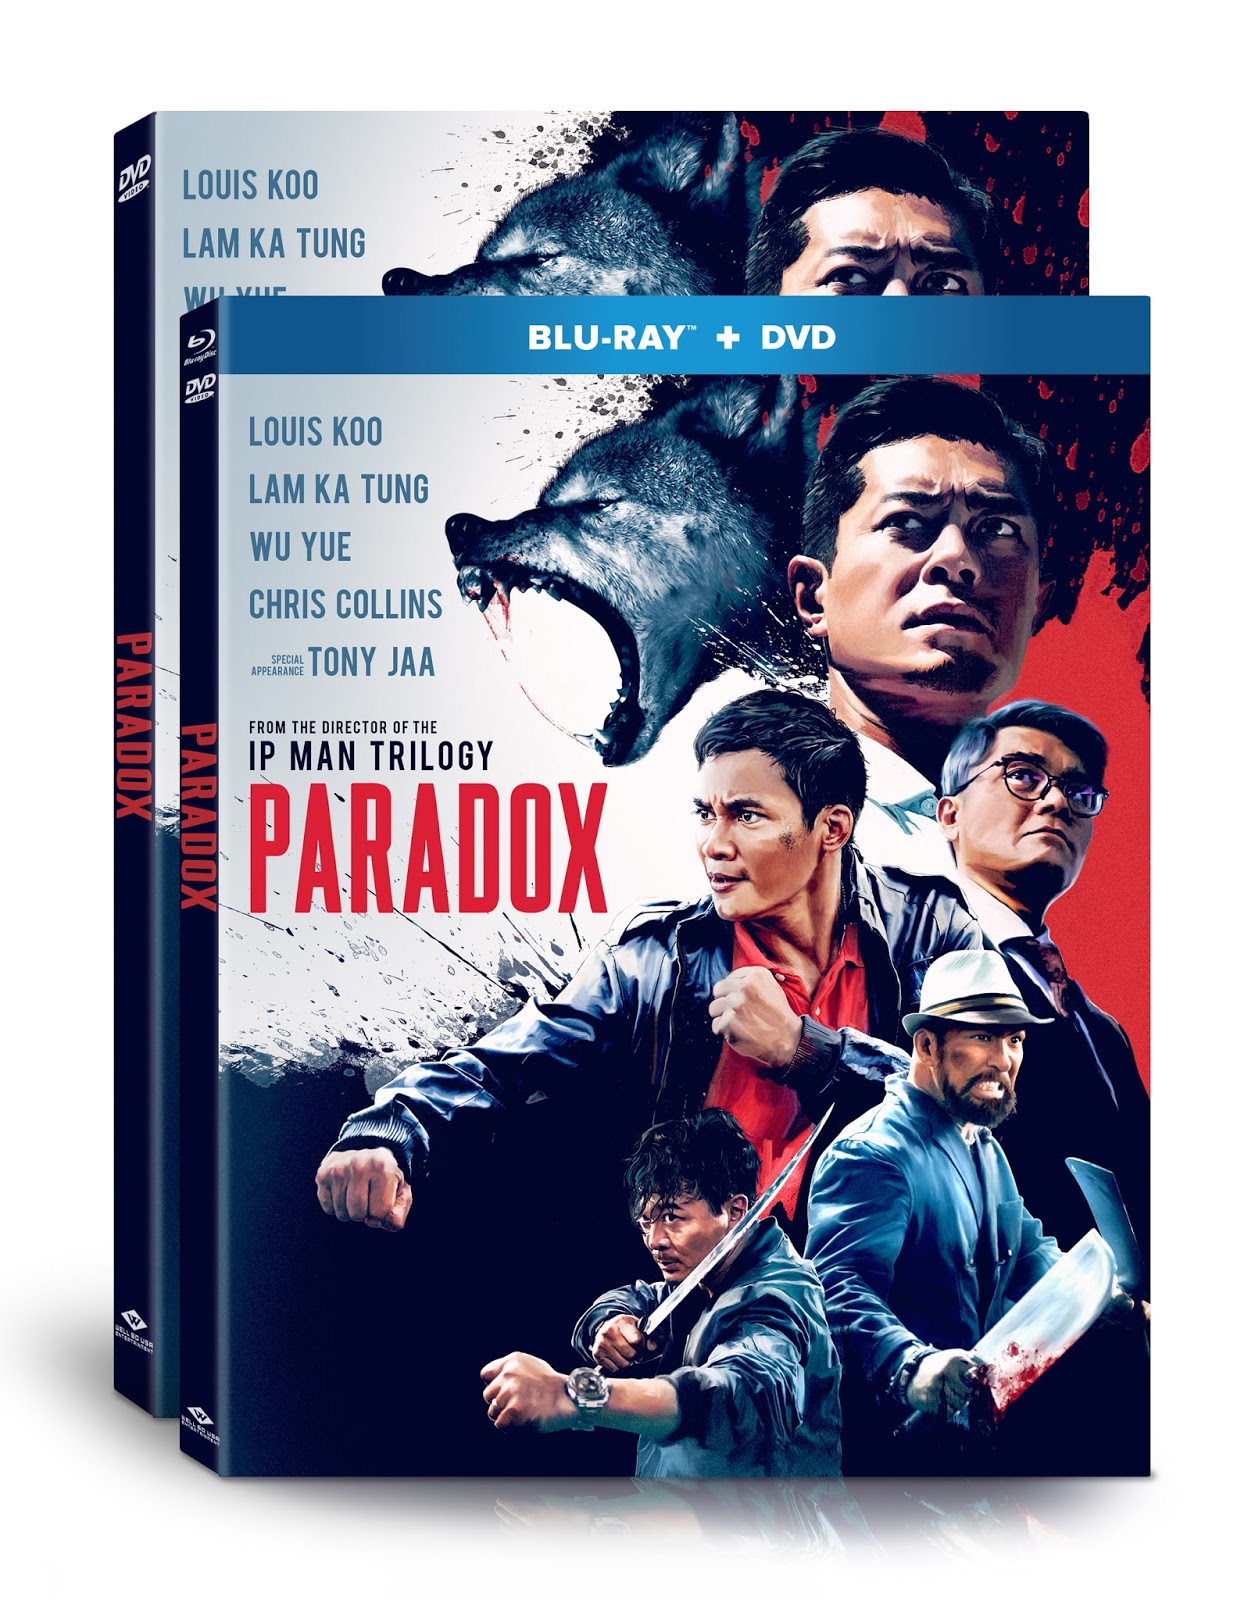 AsianCineFest: PARADOX, the third installment in the SPL series